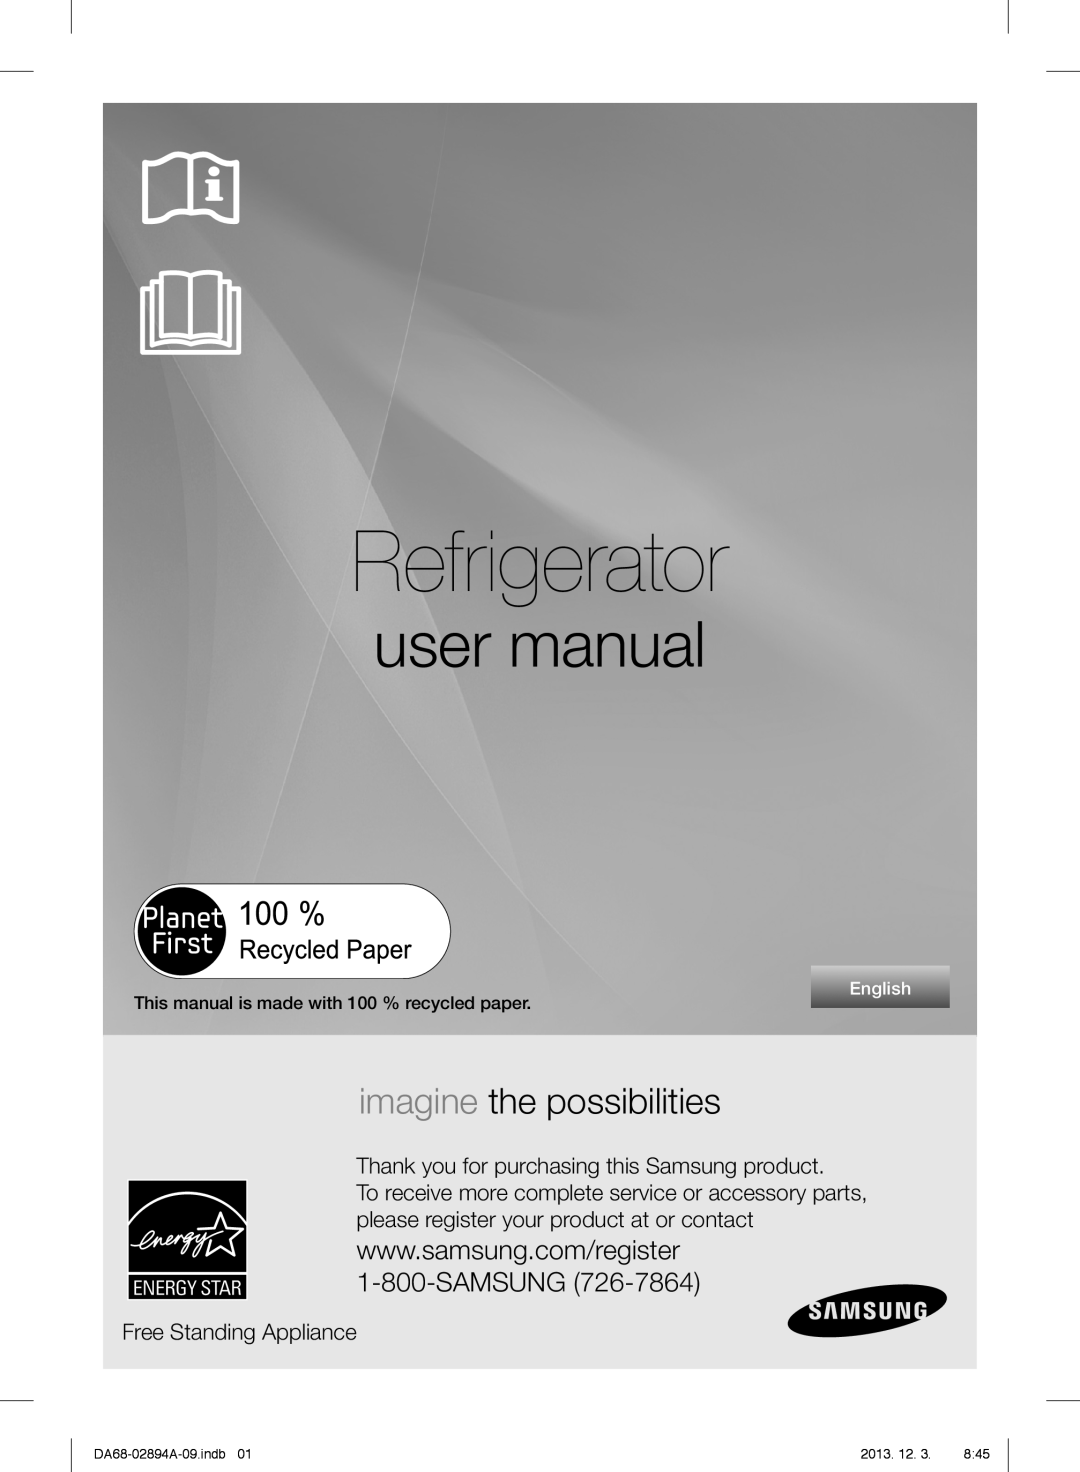 Samsung RF31FMESBSR user manual Refrigerator, imagine the possibilities, Samsung, Free Standing Appliance, English 